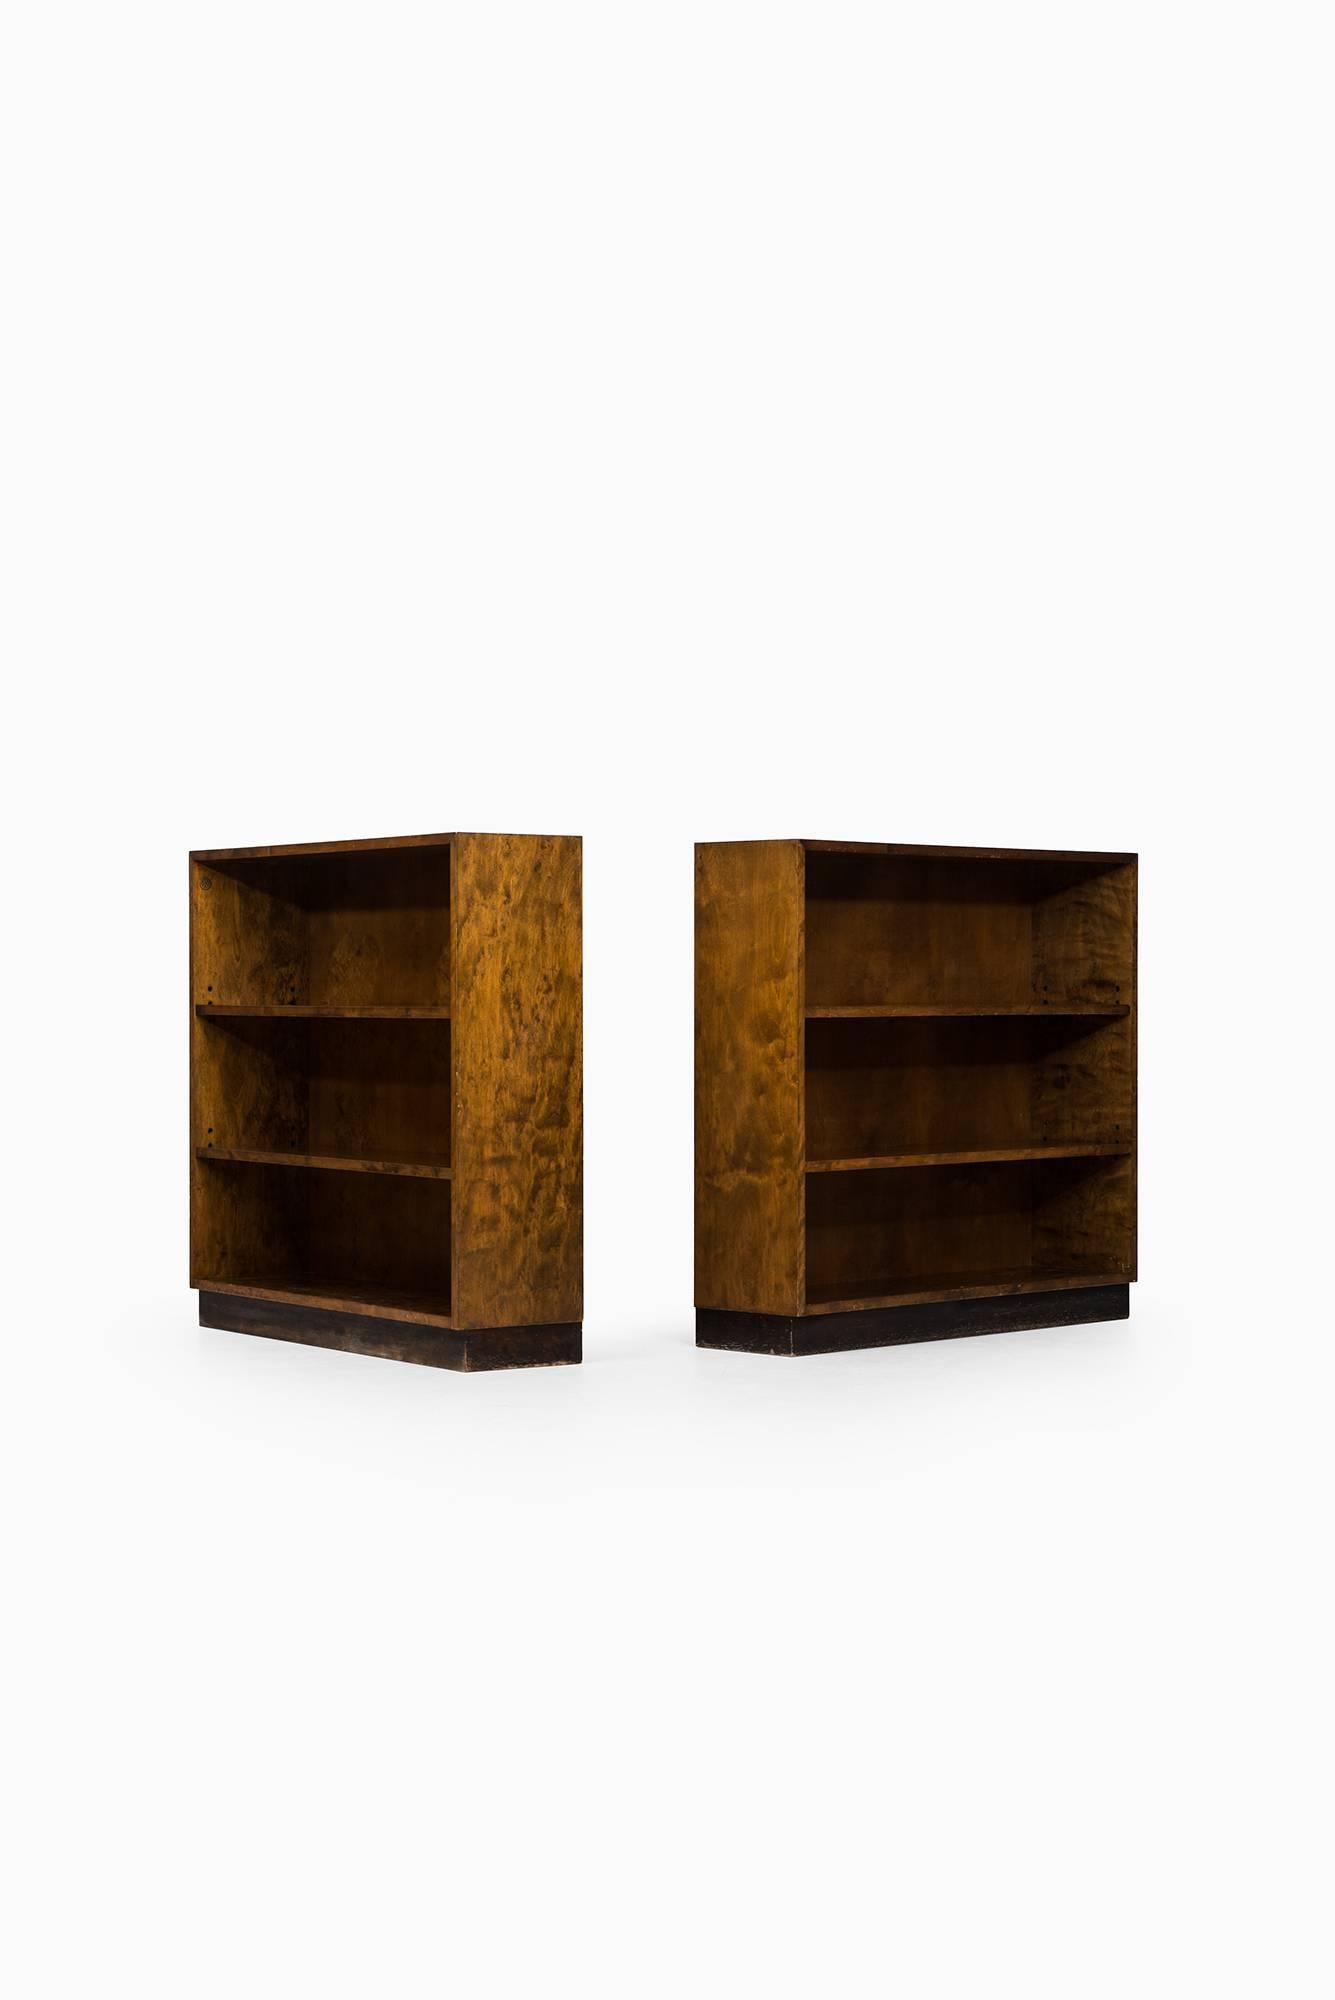 Swedish Axel Einar Hjorth Bookcases / Shelves by Nordiska Kompaniet in Sweden